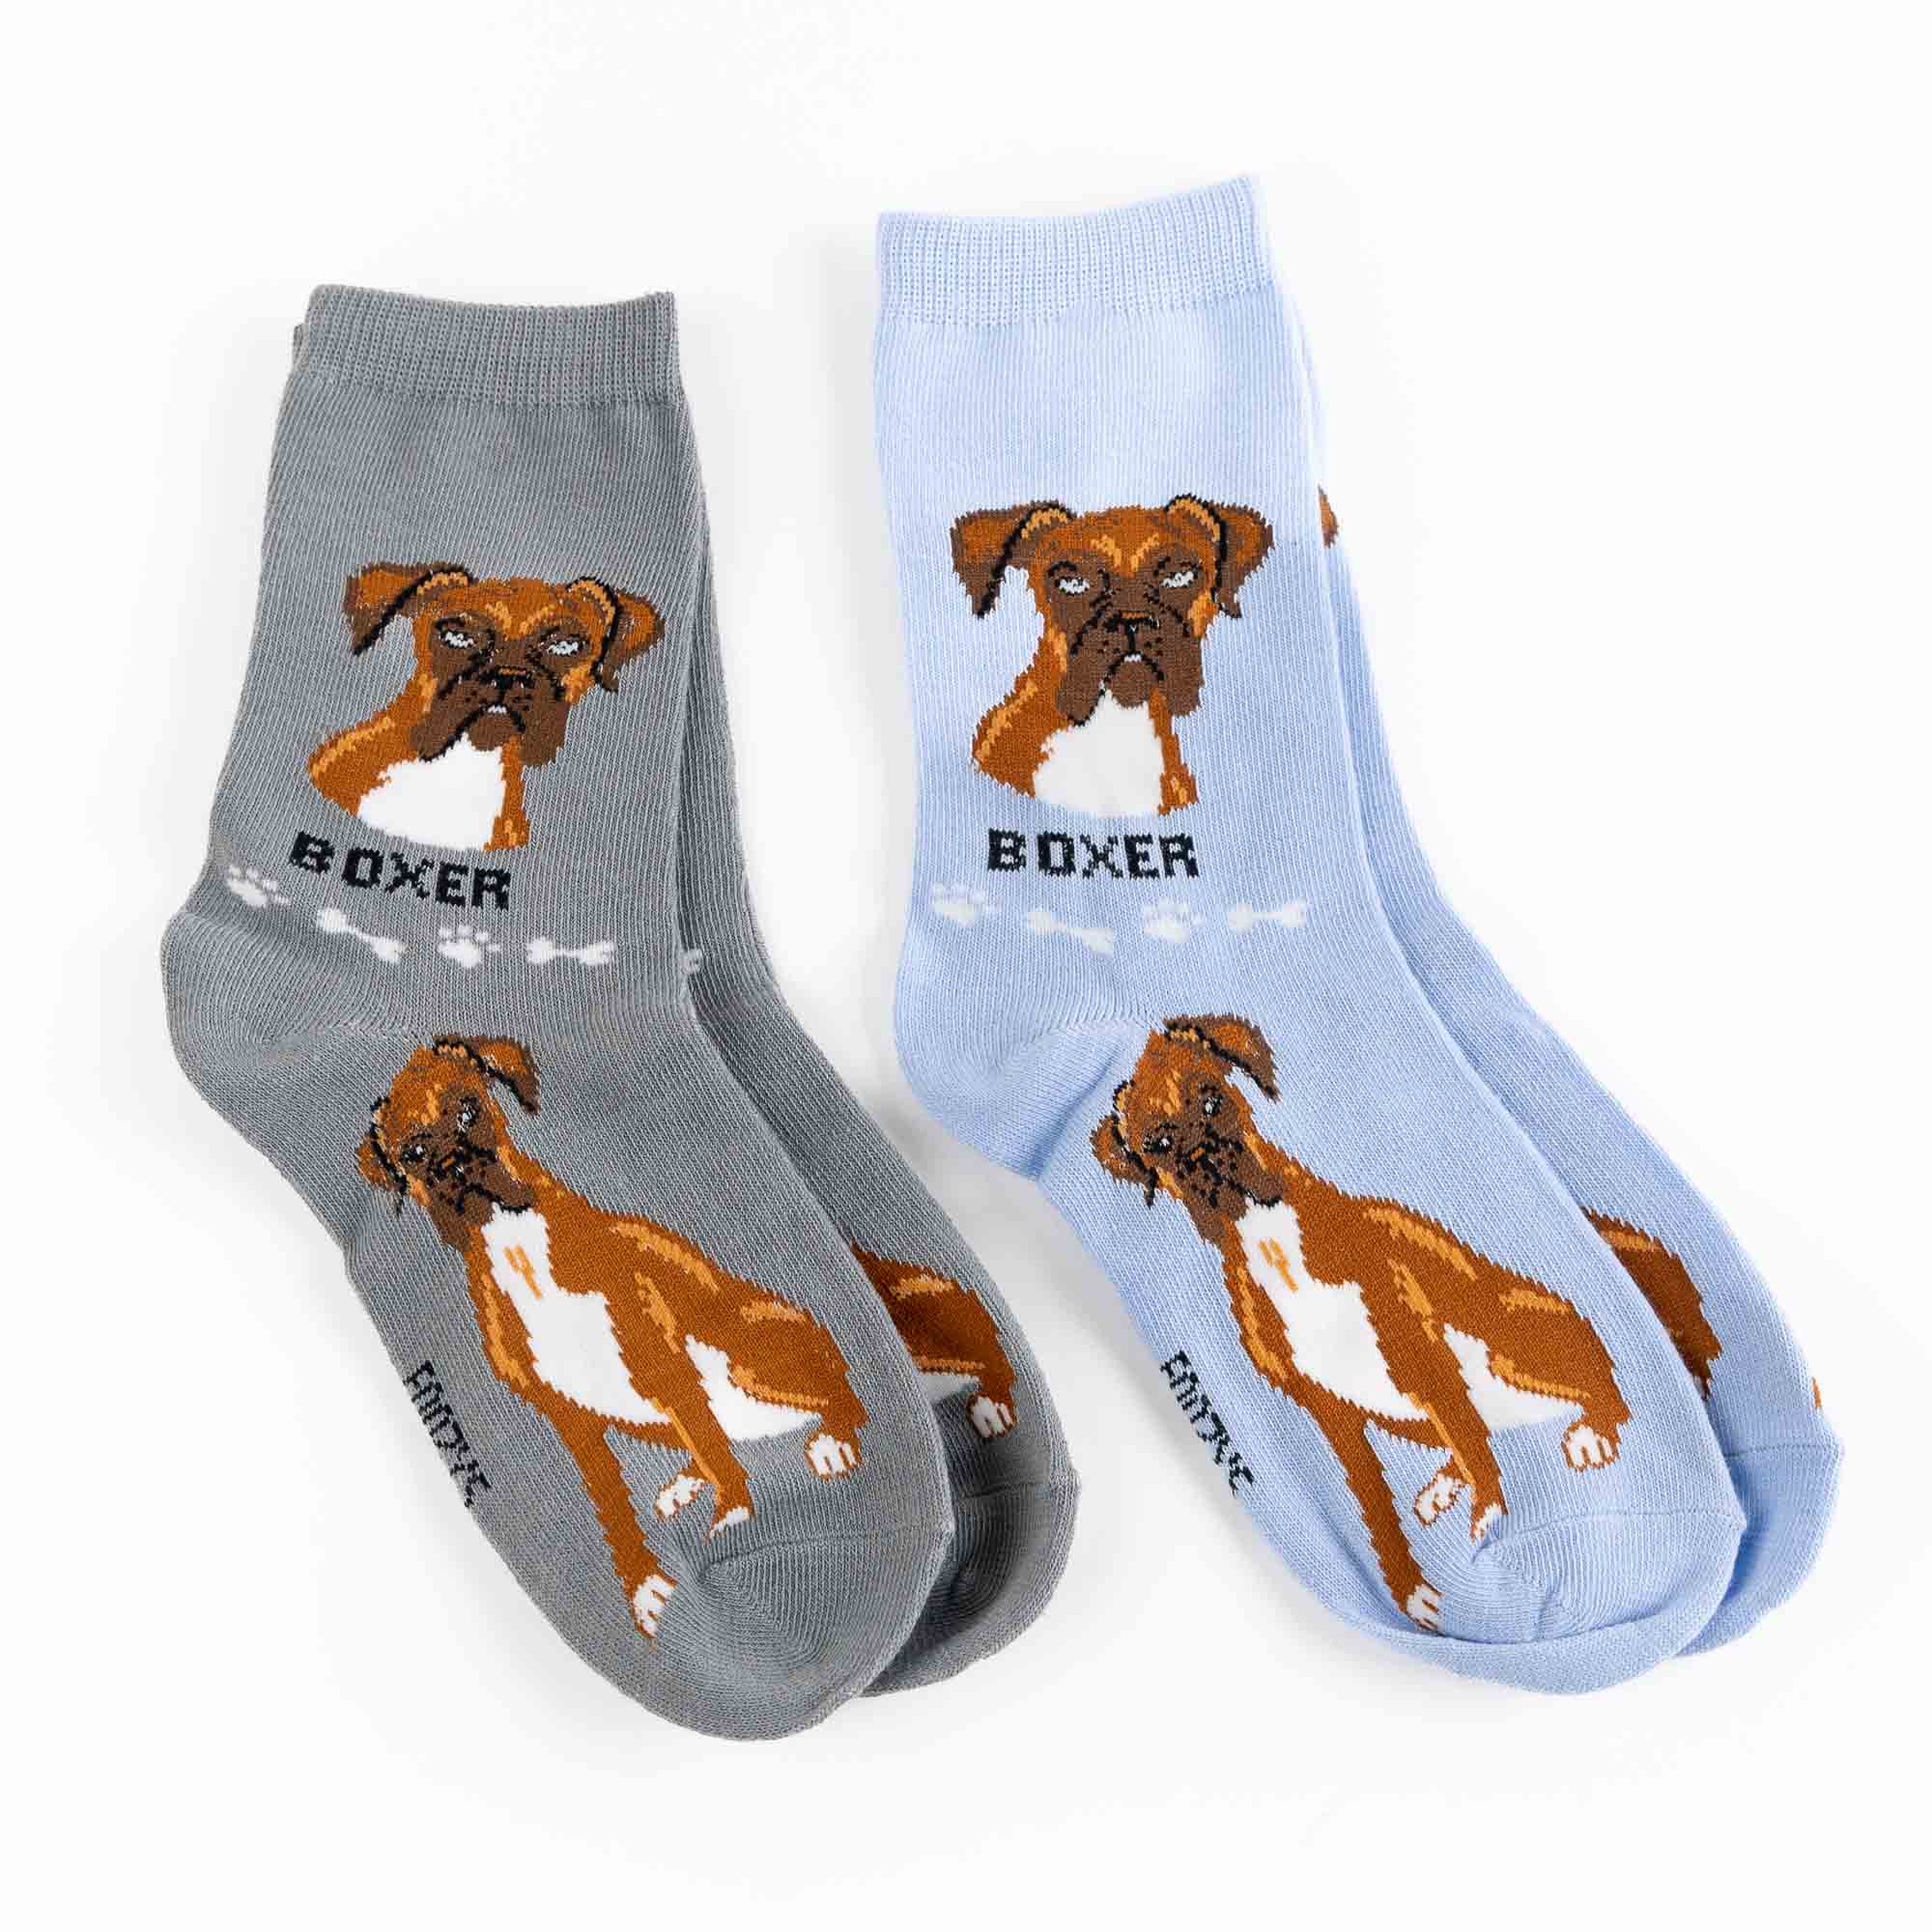 My Favorite Dog Breed Socks ❤️ Boxer - 2 Set Collection